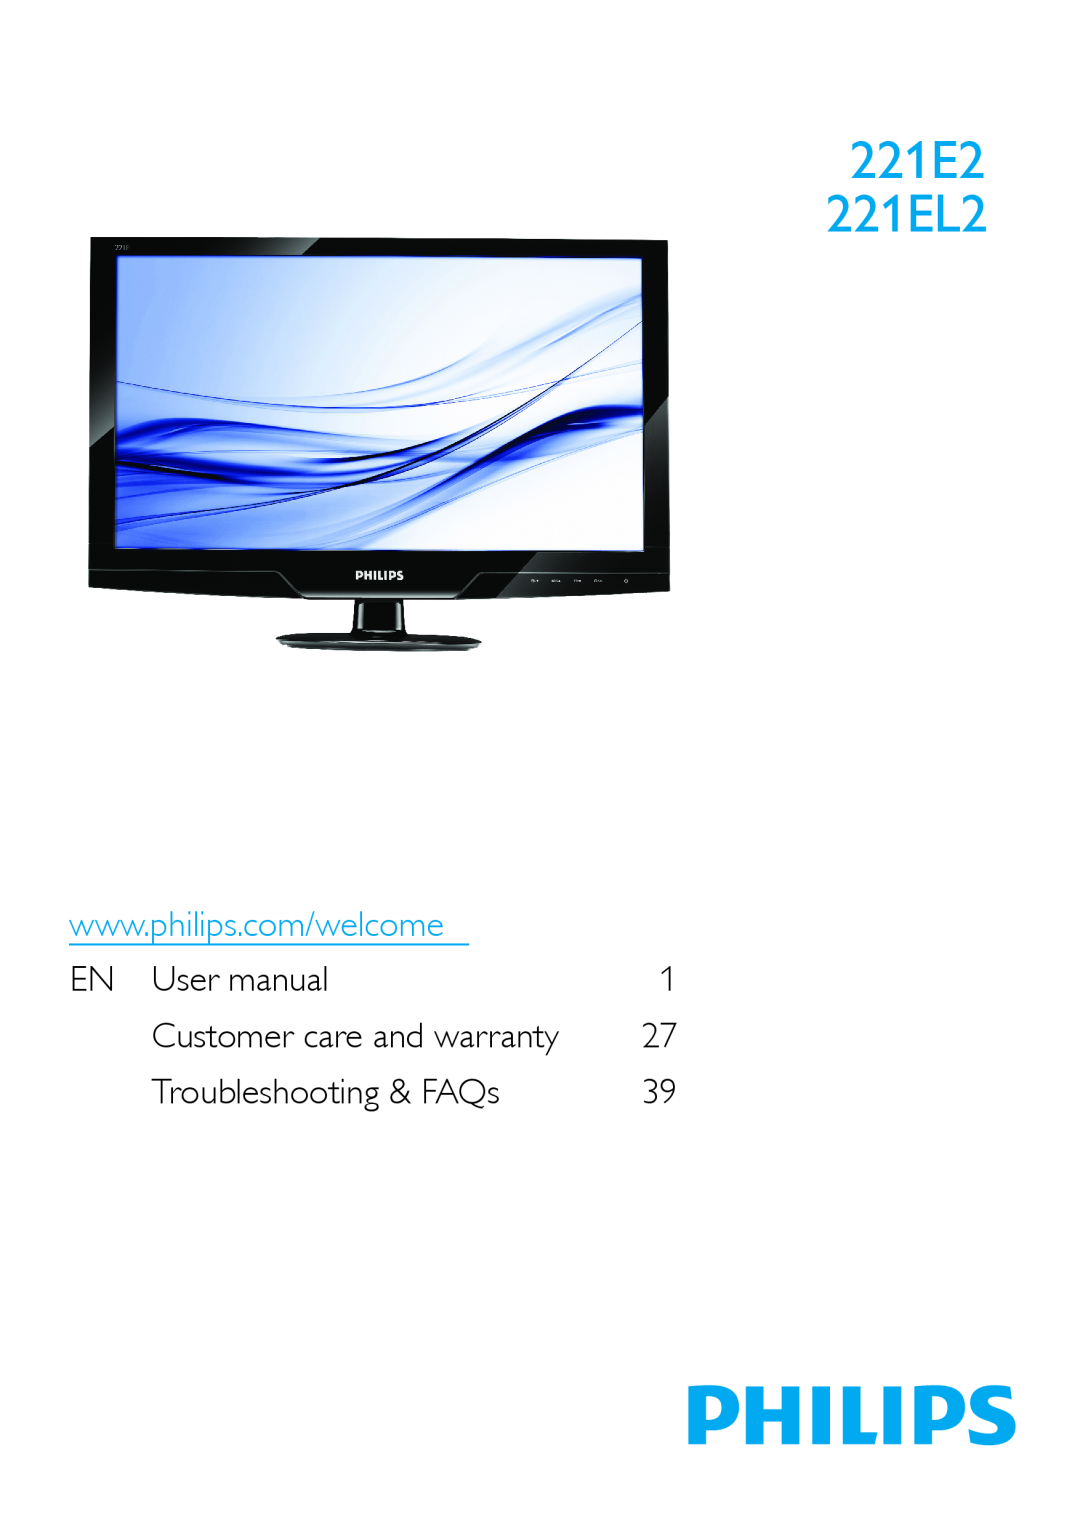 Philips 2.21E+04 user manual EN User manual, Troubleshooting & FAQs, 221E2 221EL2, Customer care and warranty 